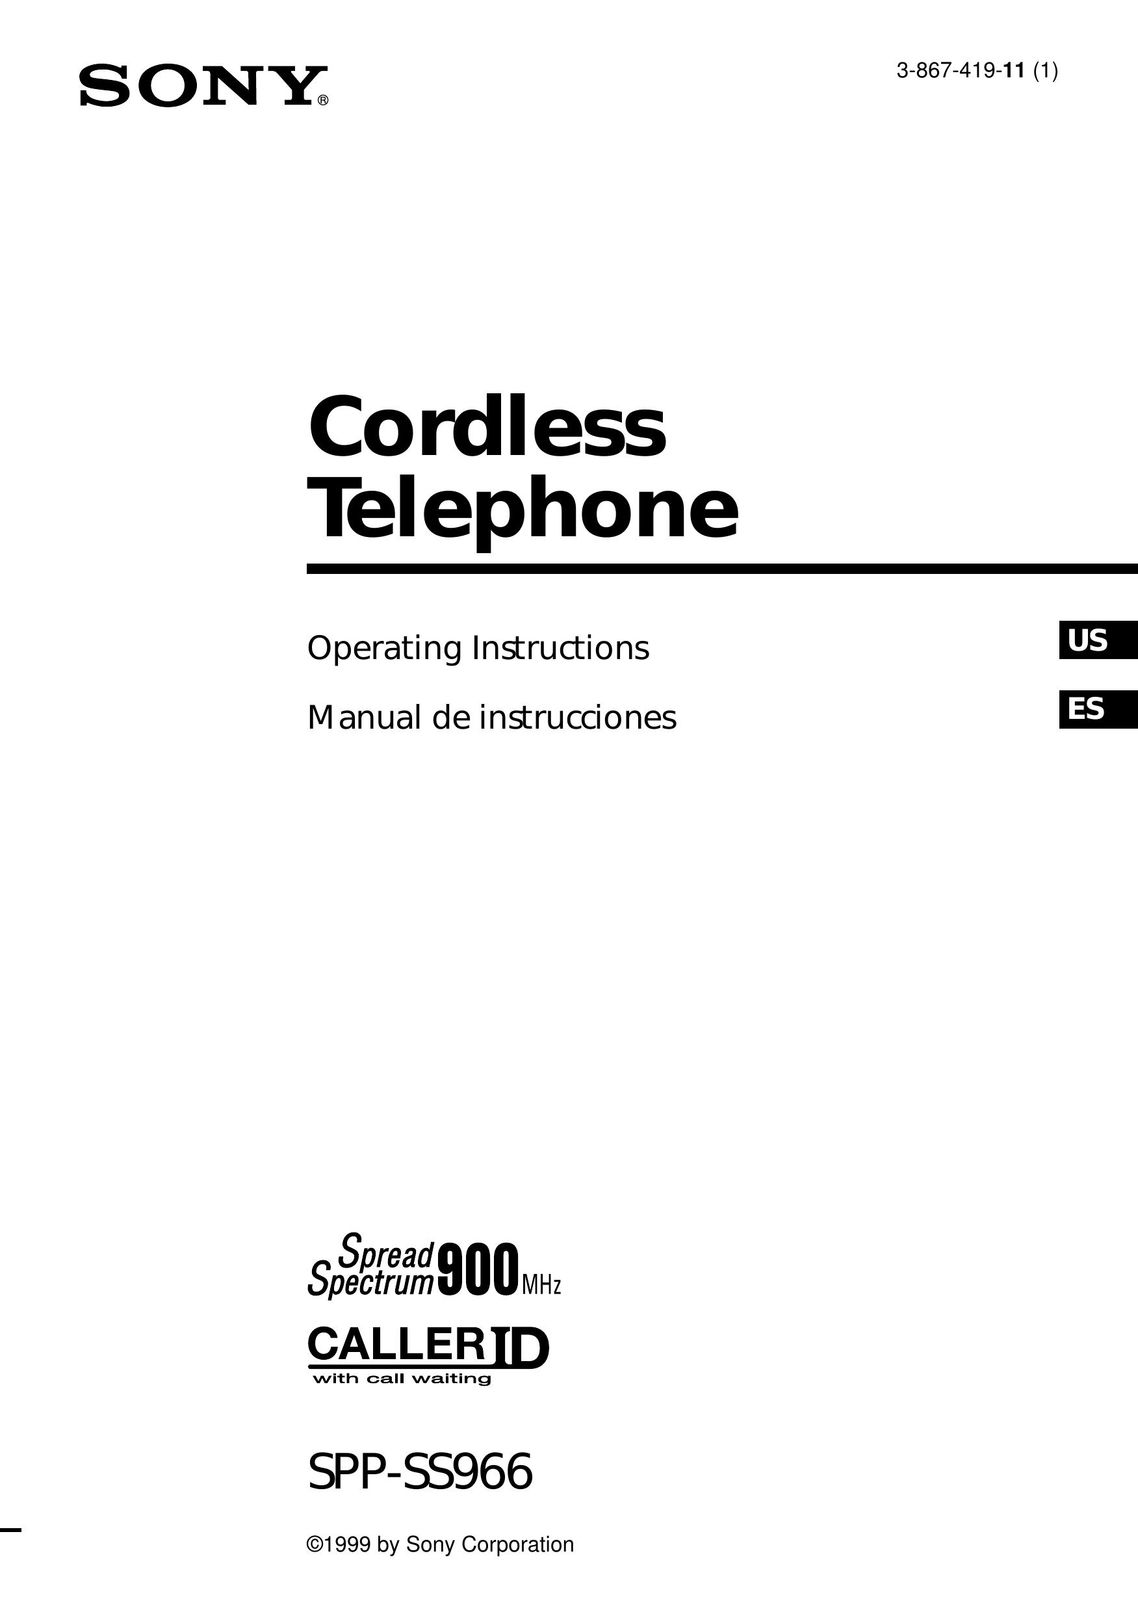 Sony SPP-SS966 Cordless Telephone User Manual